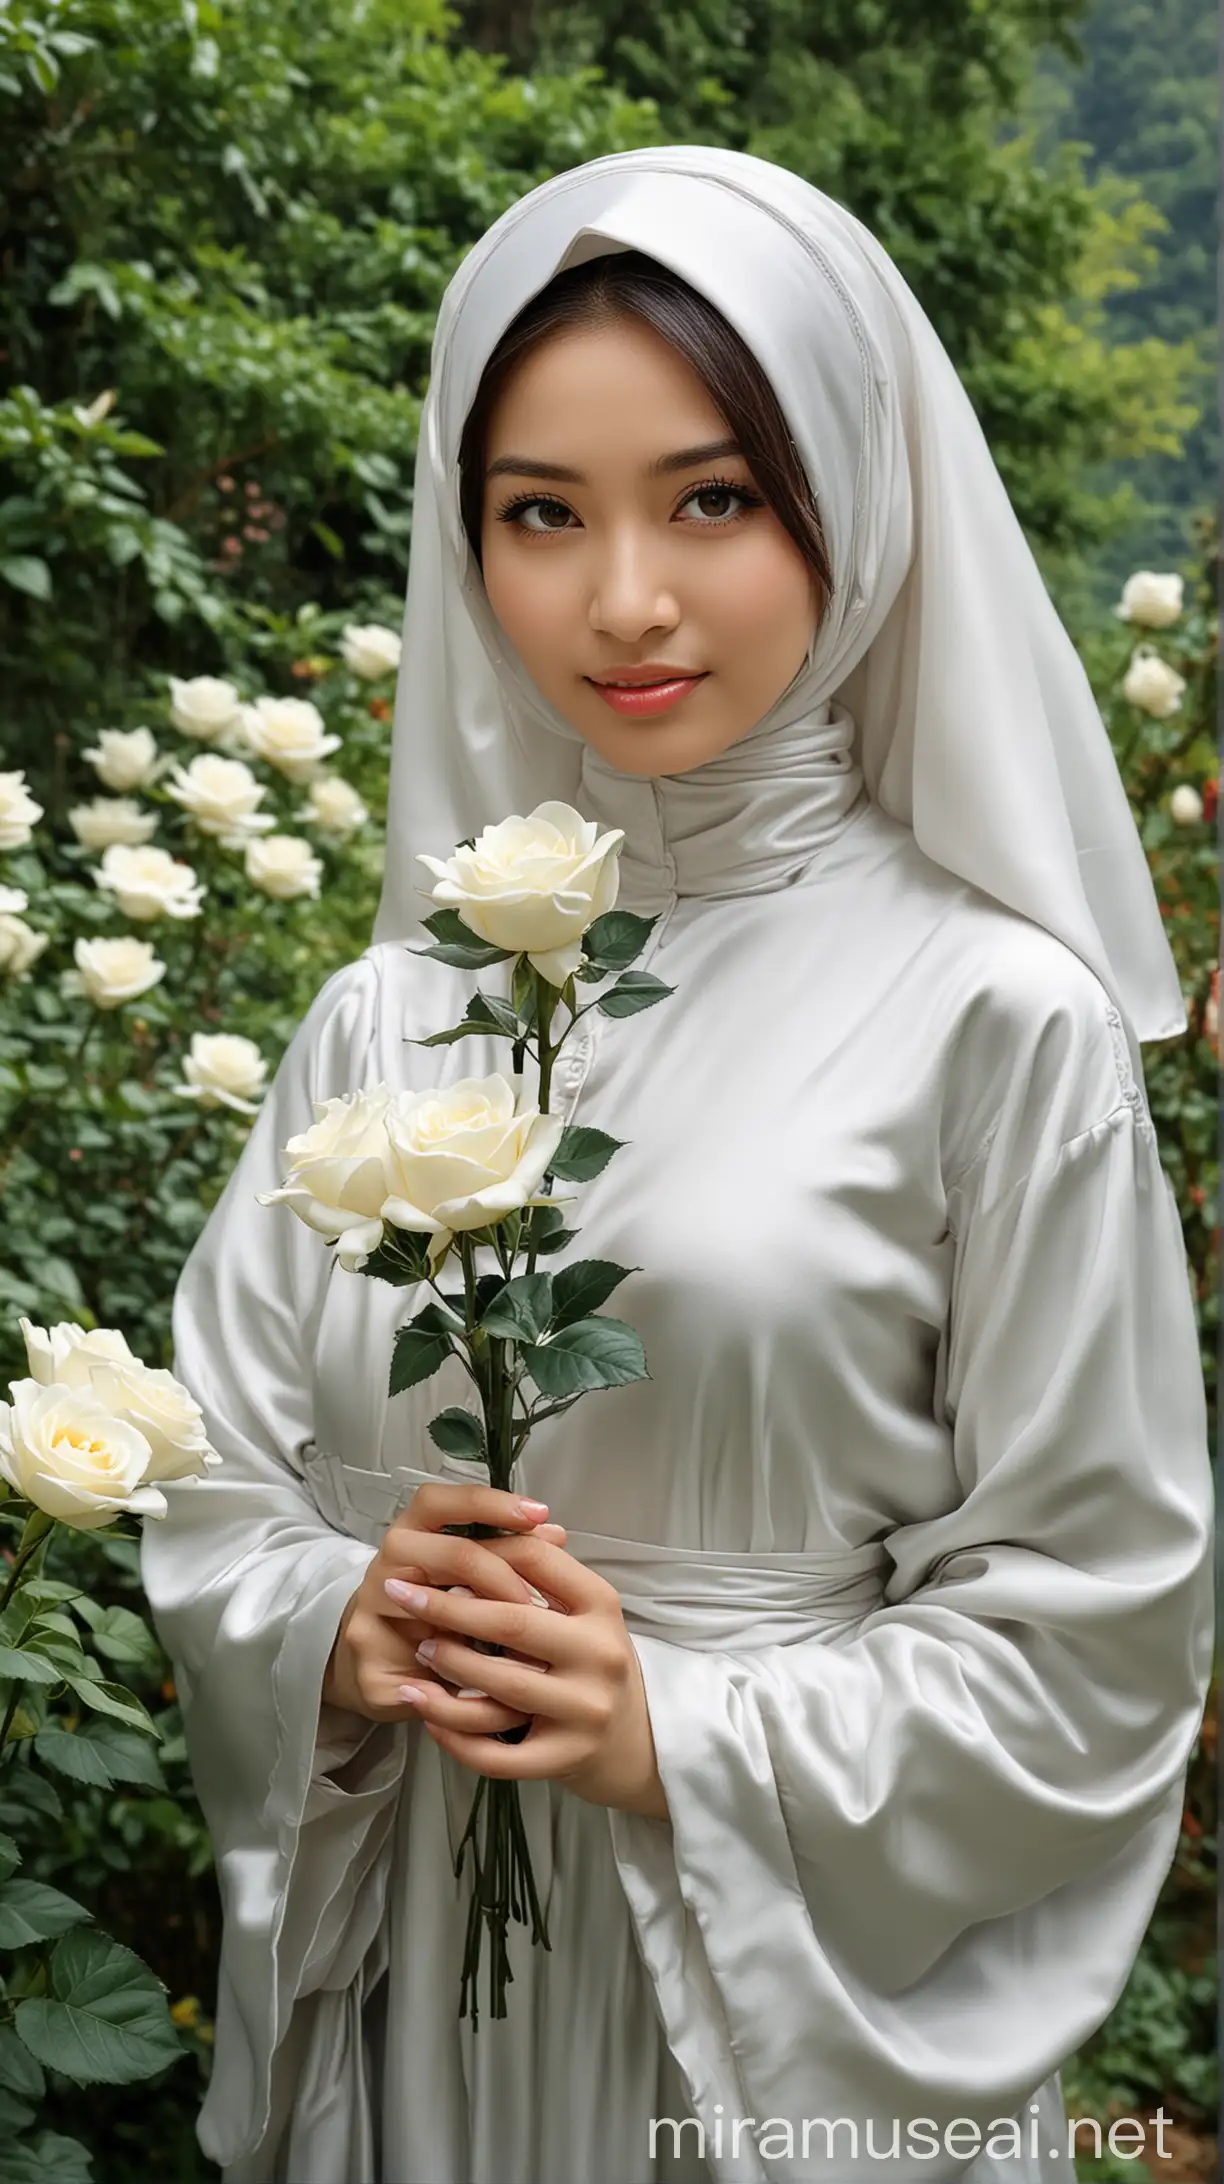 Stylish Muslim Girl in Hijab with White Rose in Tea Garden